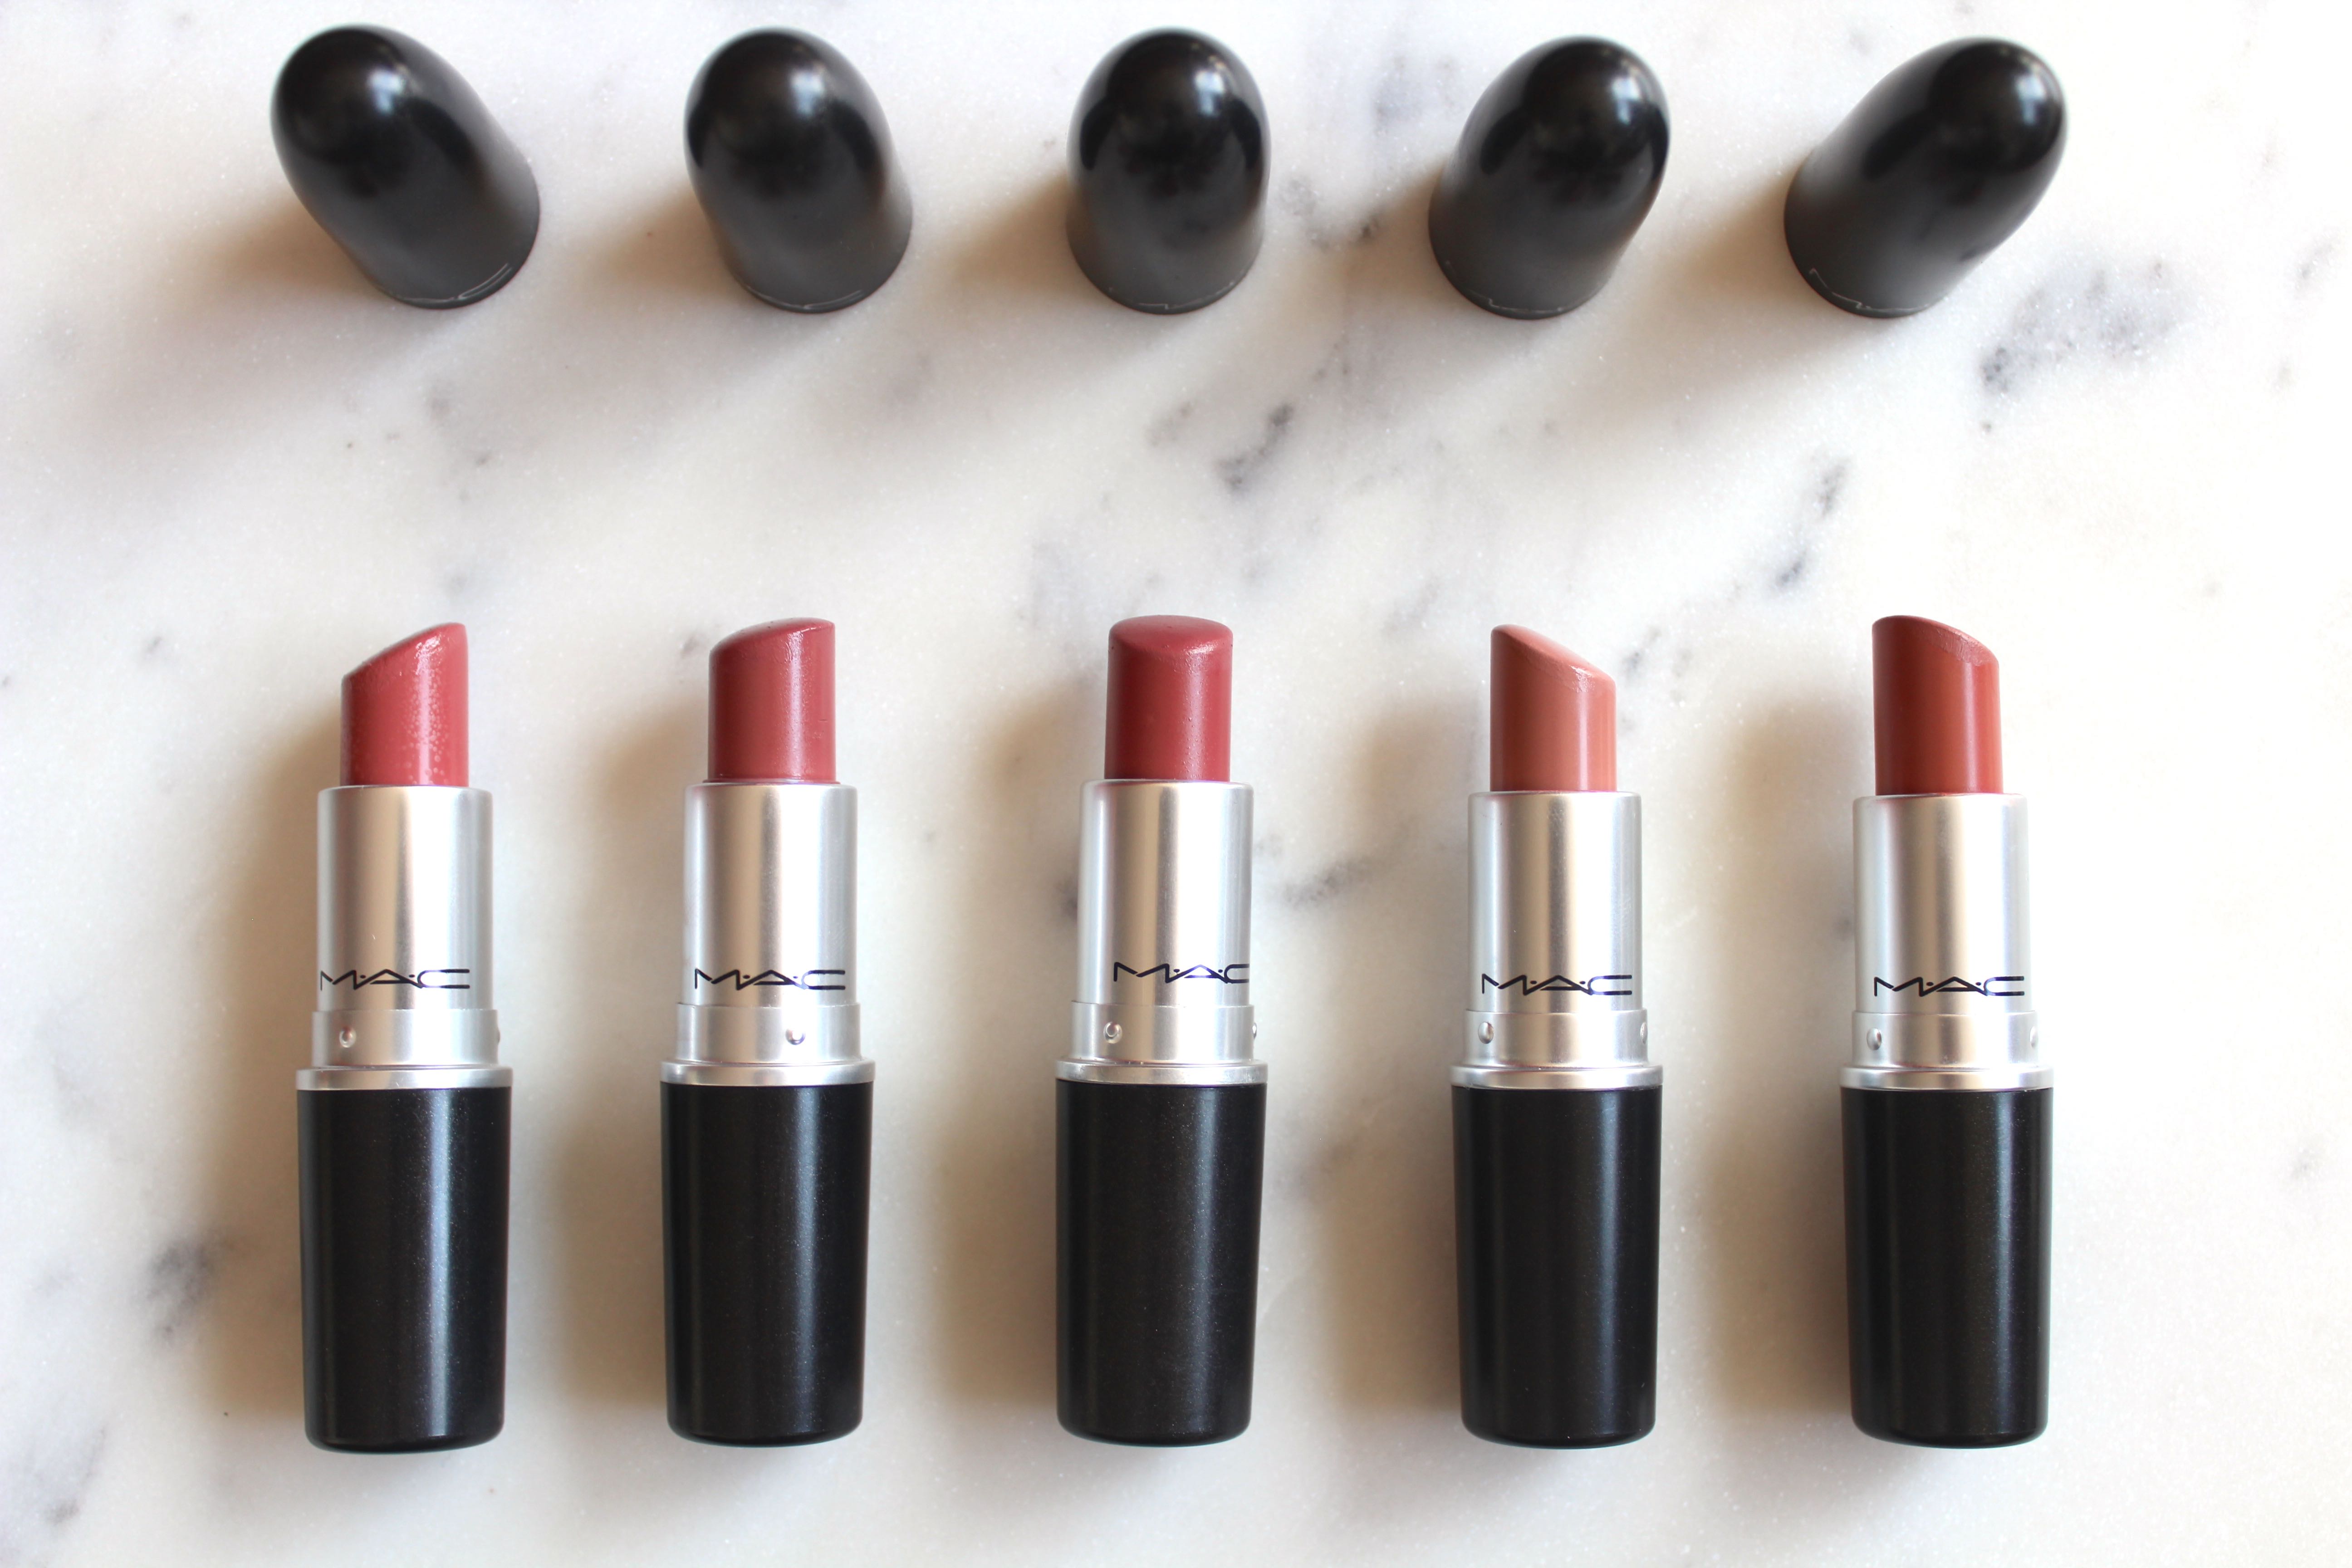 velvet teddy mac - Pesquisa Google  Lipstick makeup, Mac lipstick shades,  Lipstick